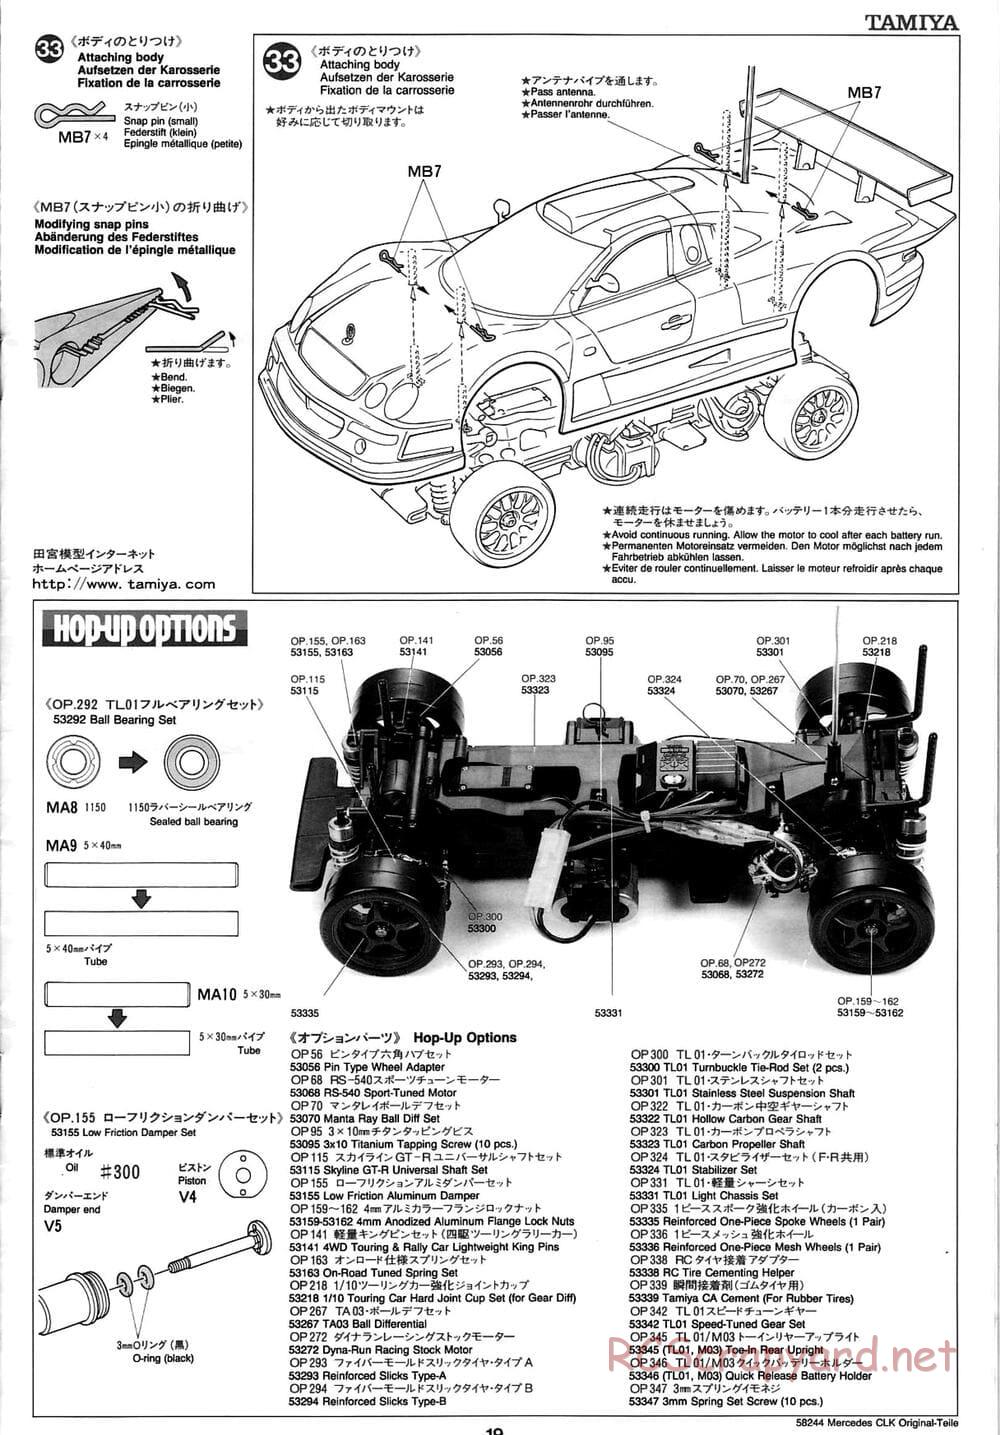 Tamiya - Mercedes CLK-GTR Original-Teile - TL-01 Chassis - Manual - Page 19